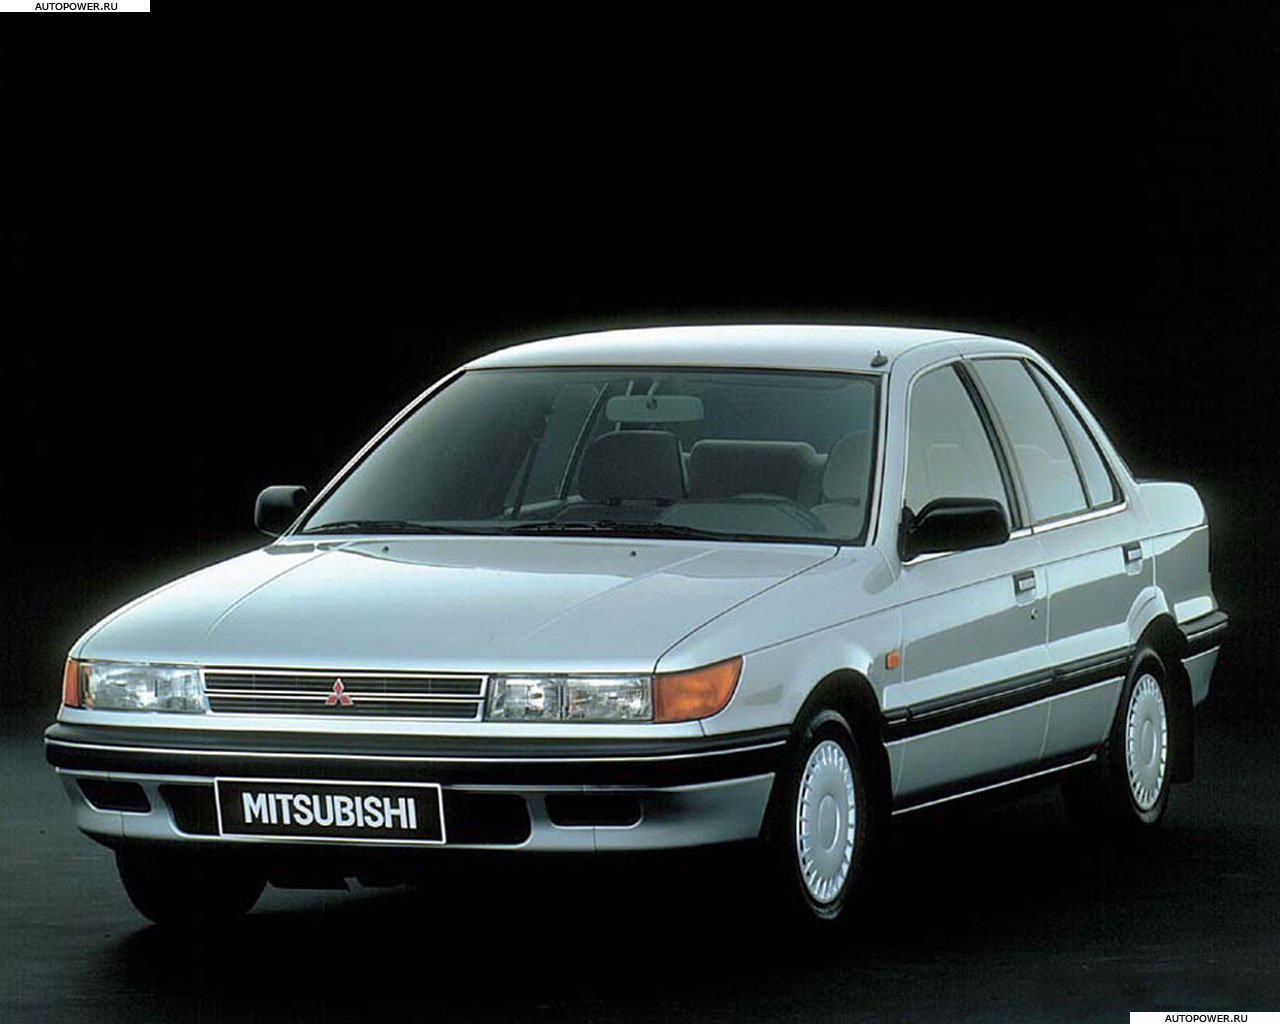 Mitsubishi 3 1. Mitsubishi Lancer 1991 седан. Mitsubishi Lancer 5 поколения. Mitsubishi Lancer 1991-1992. Митсубиси Лансер 4 поколения.